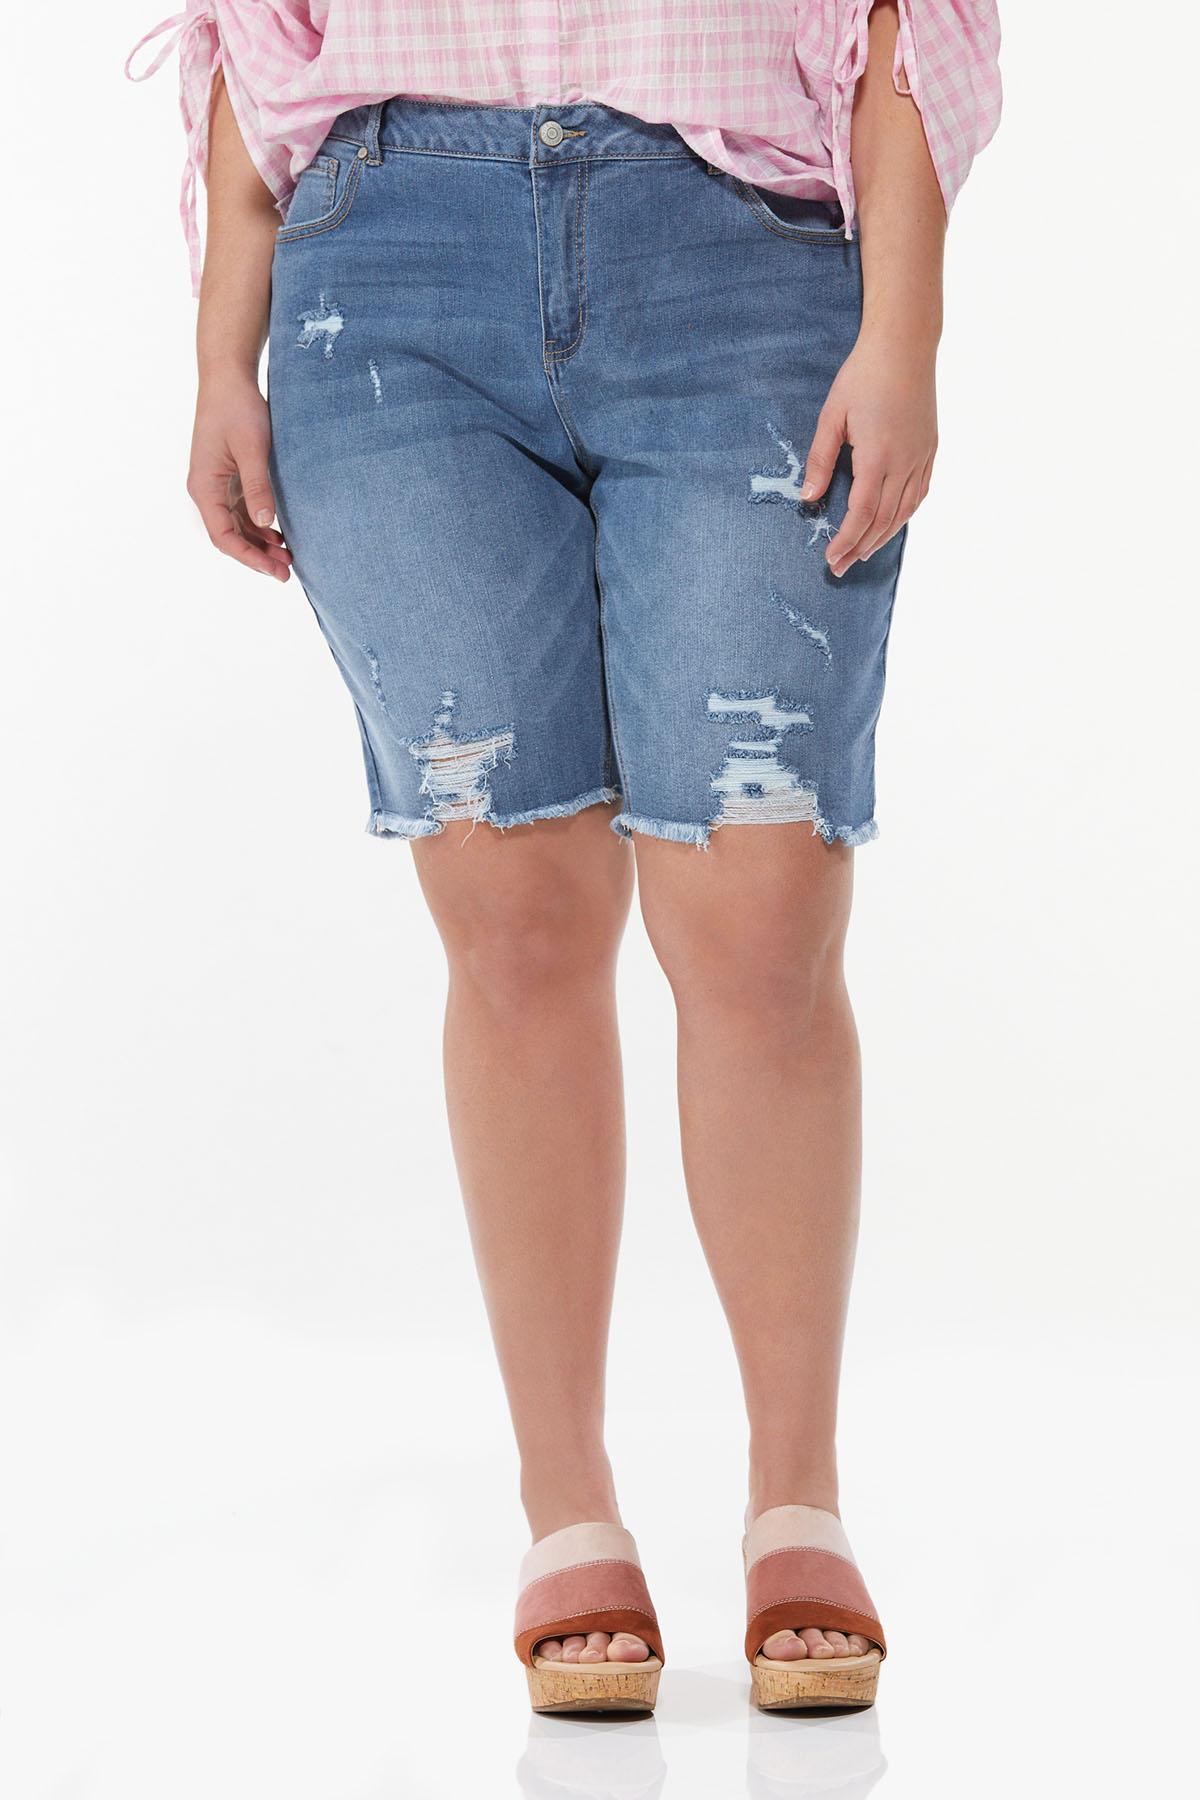 Plus Size Distressed Denim Shorts